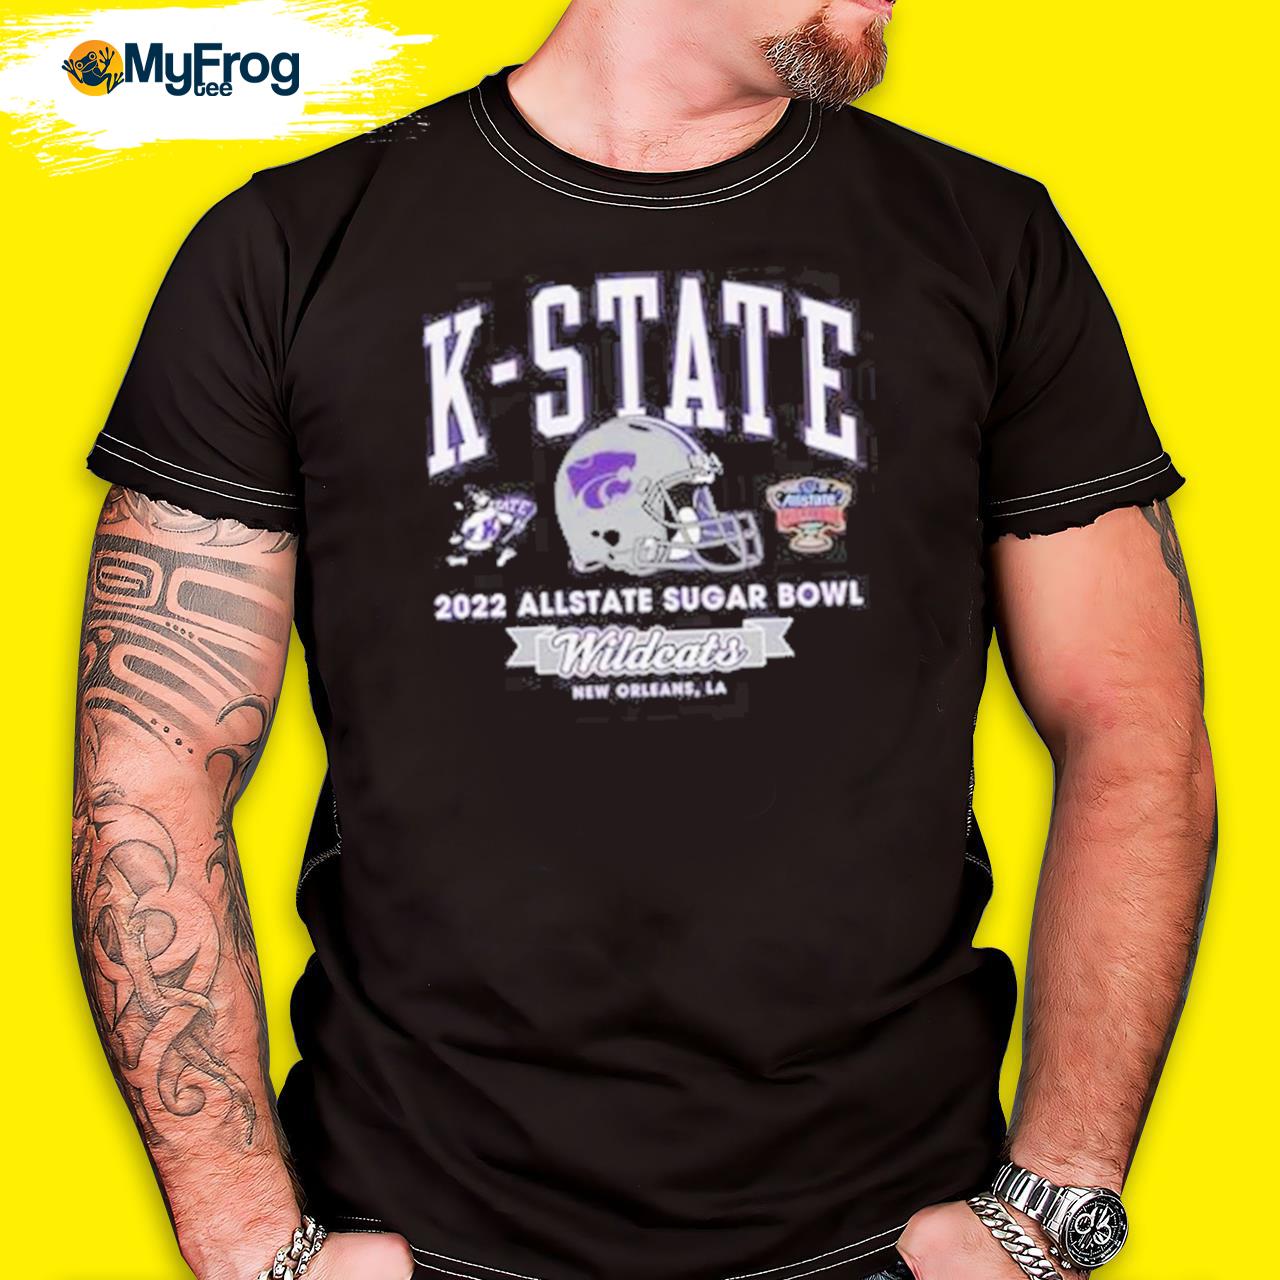 K-State Allstate Sugar Bowl Wildcats 2022 shirt